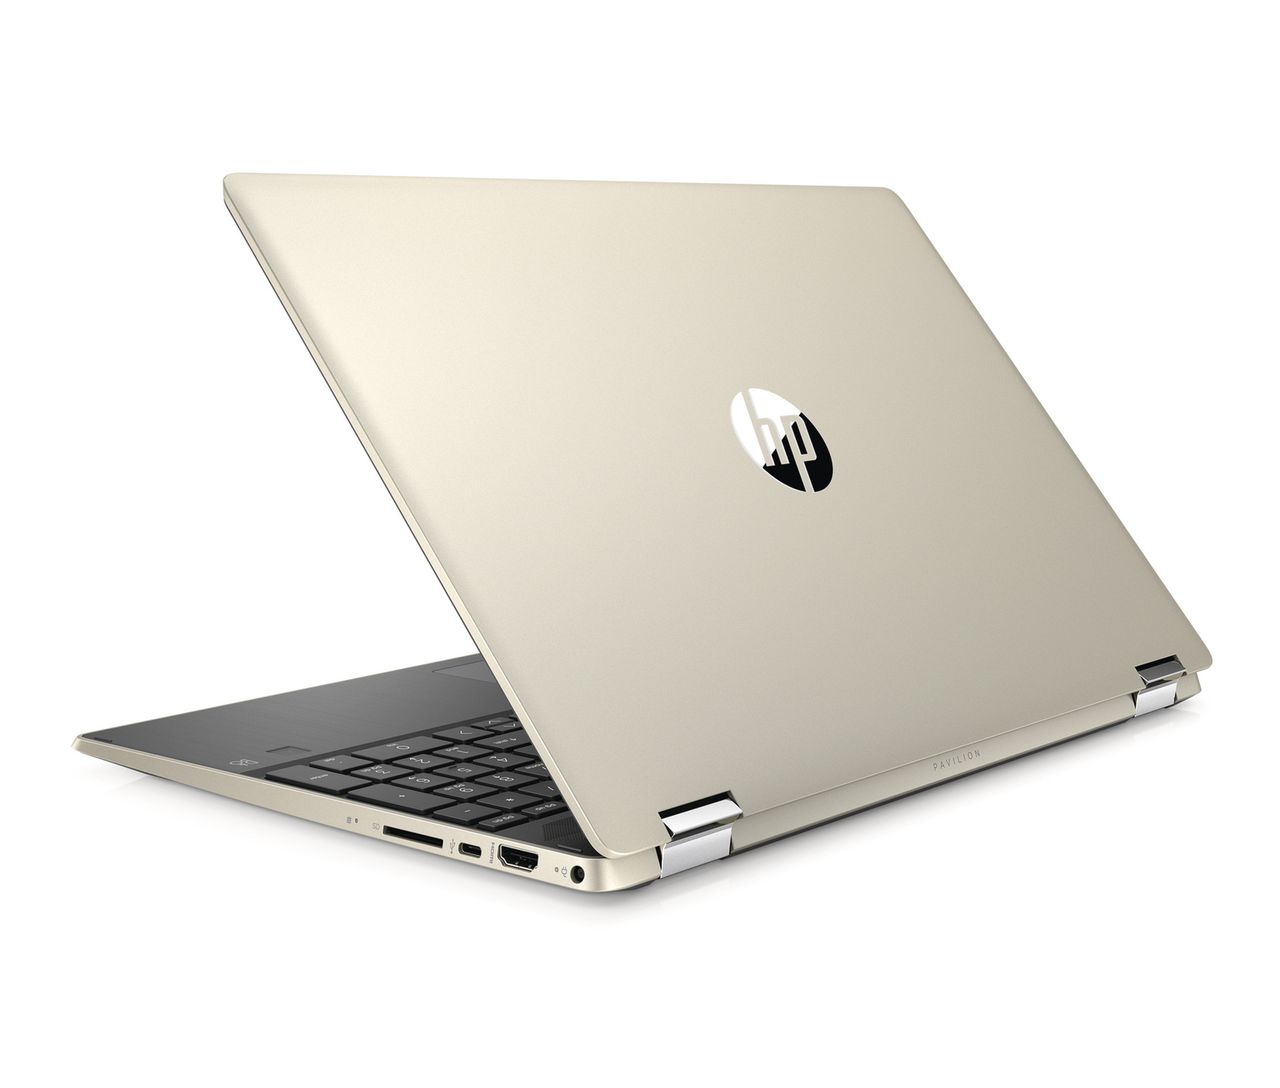 Nowe laptopy HP Pavilion oraz monitory 4K i QHD. Producent odświeża ofertę